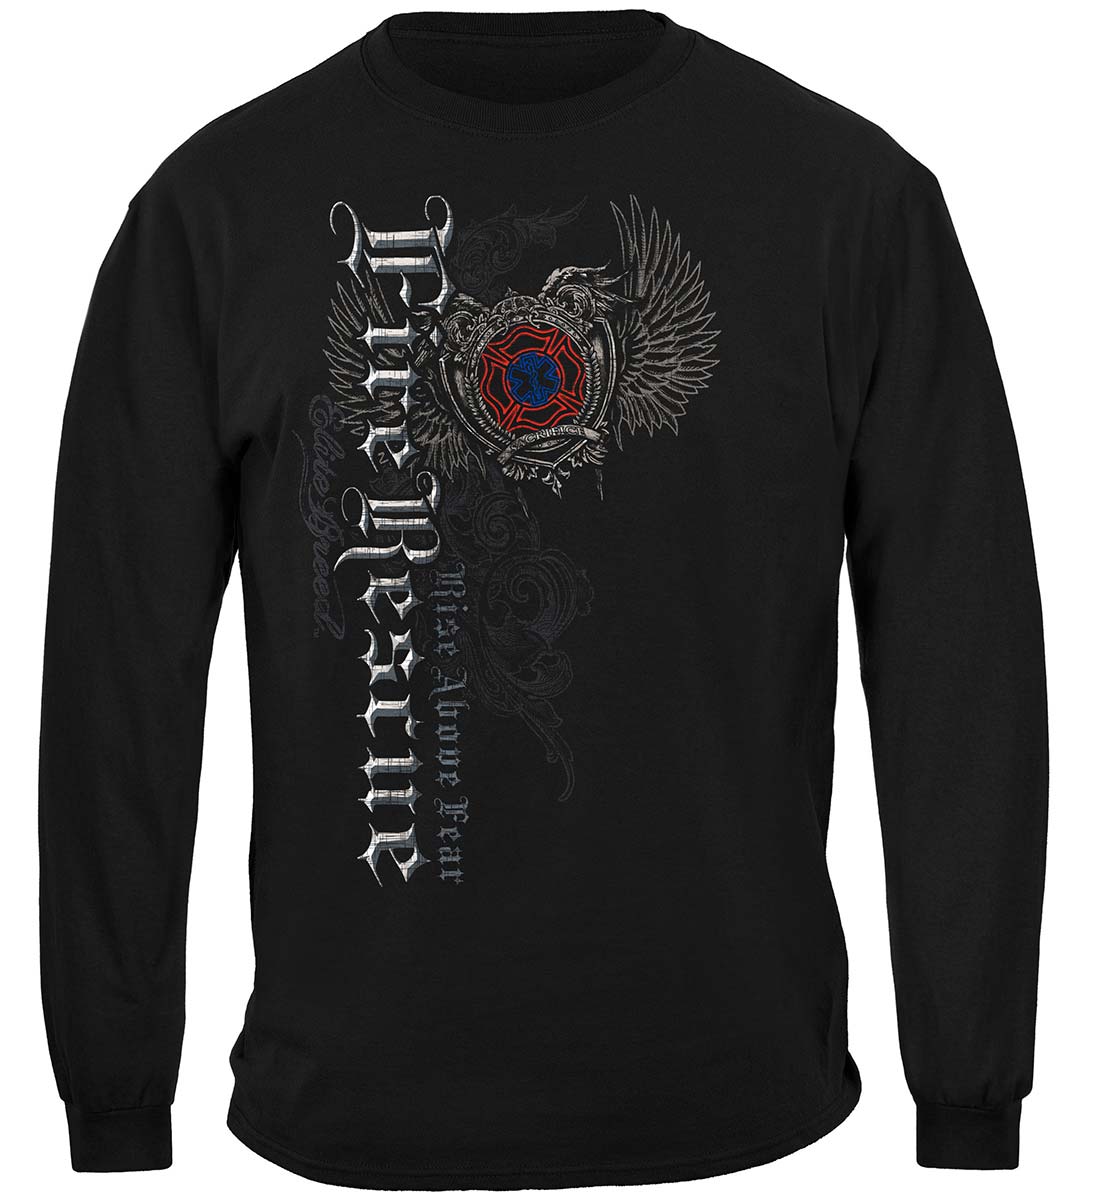 Elite Breed Fire Rescue Premium T-Shirt